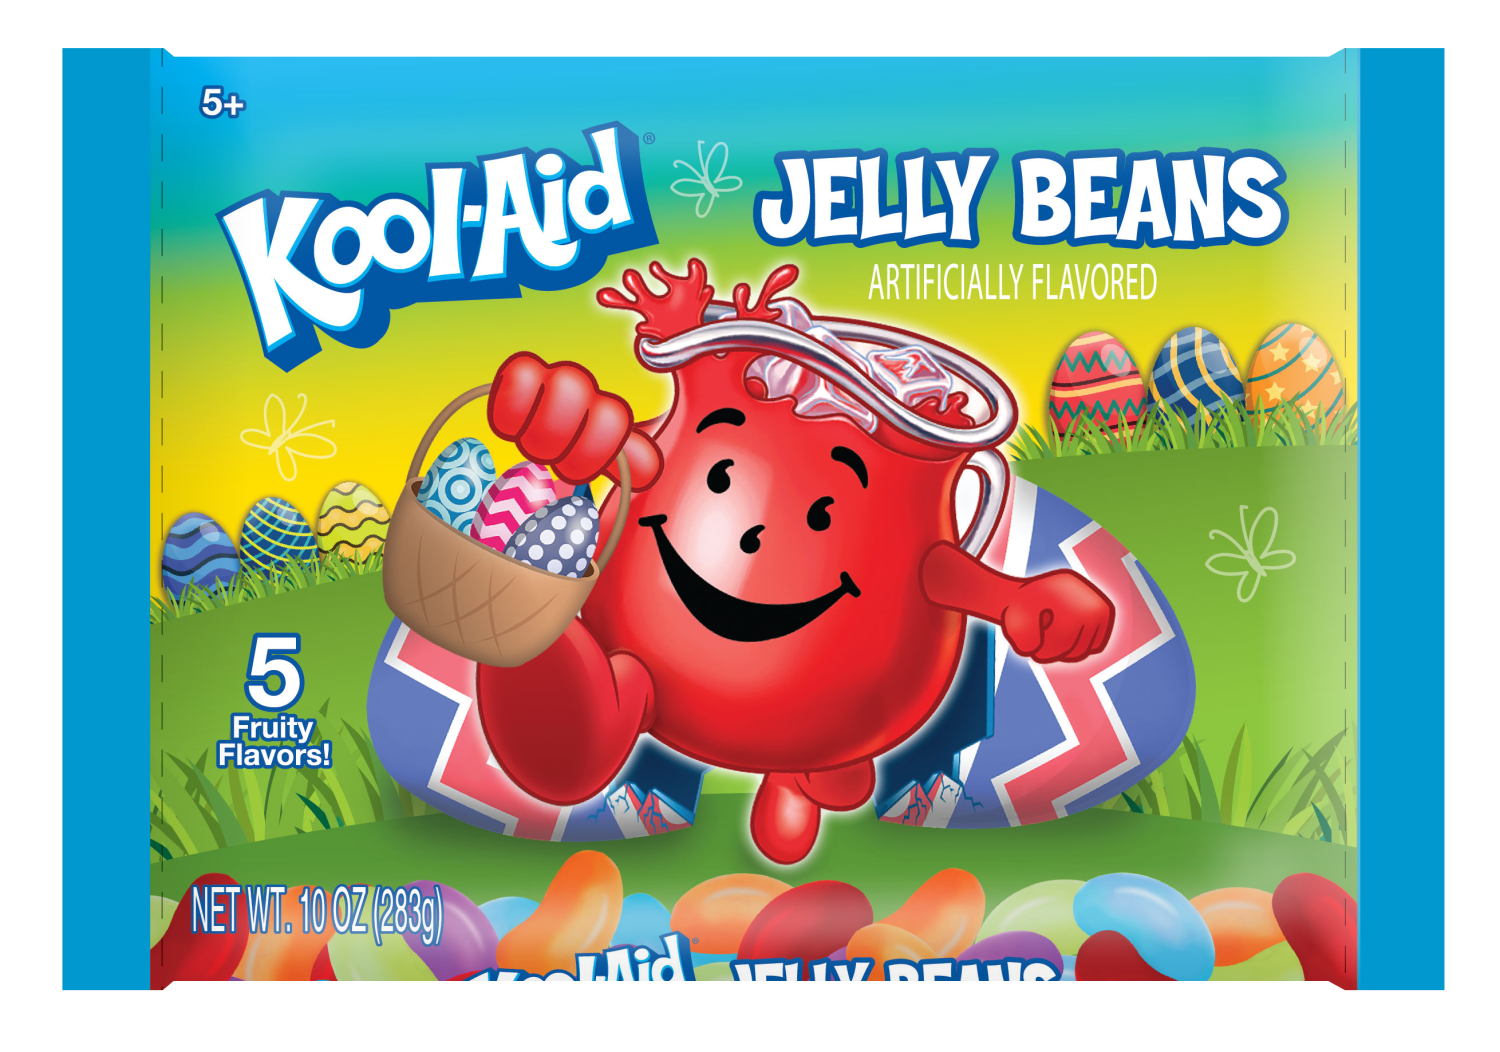 Kool-Aid Kool-Aid Easter Jelly Beans Laydown Bag 10oz.